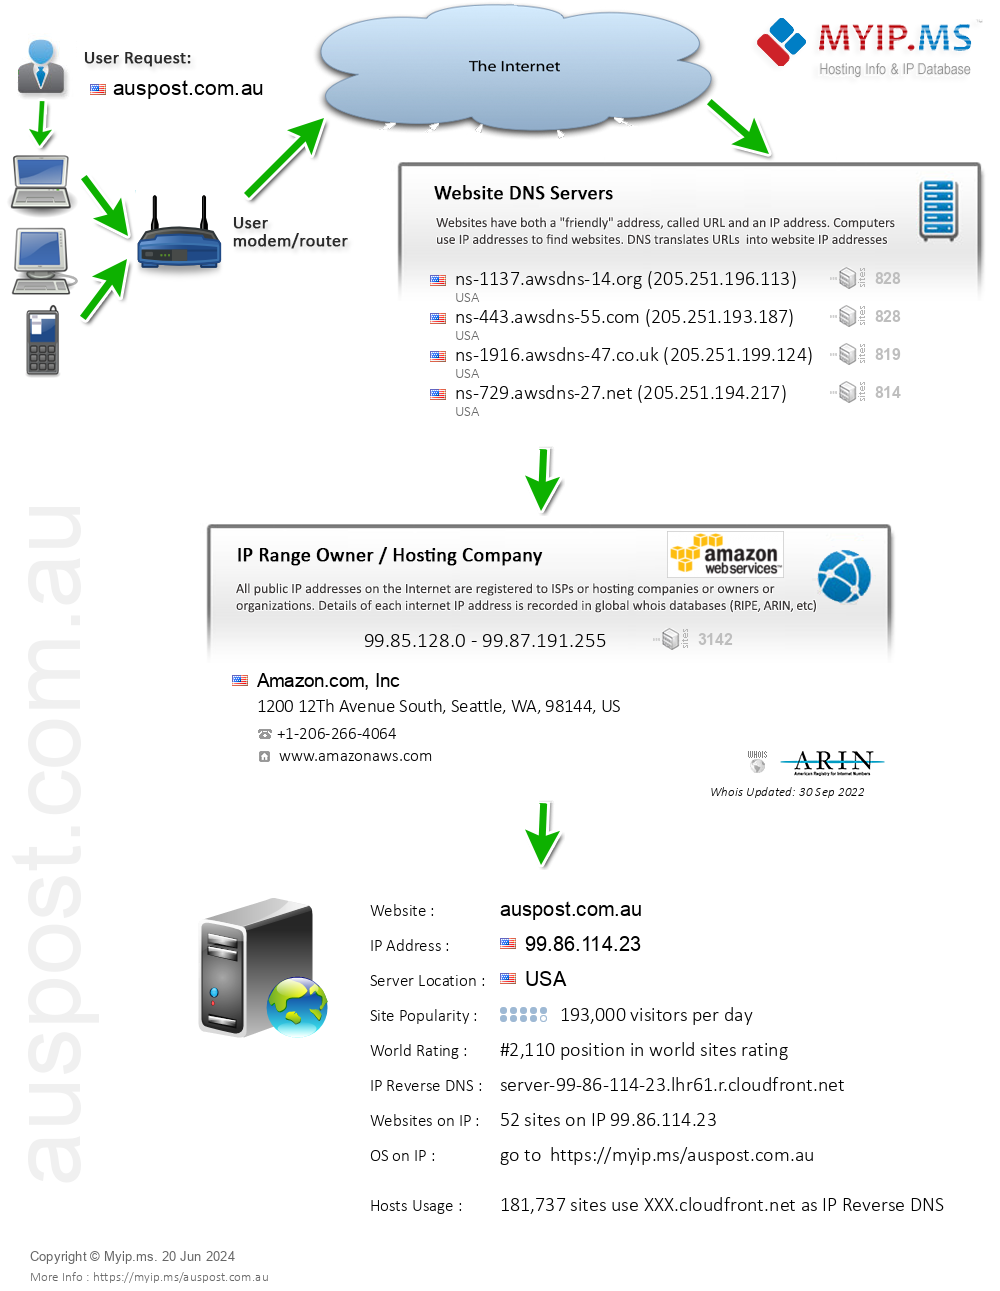 Auspost.com.au - Website Hosting Visual IP Diagram